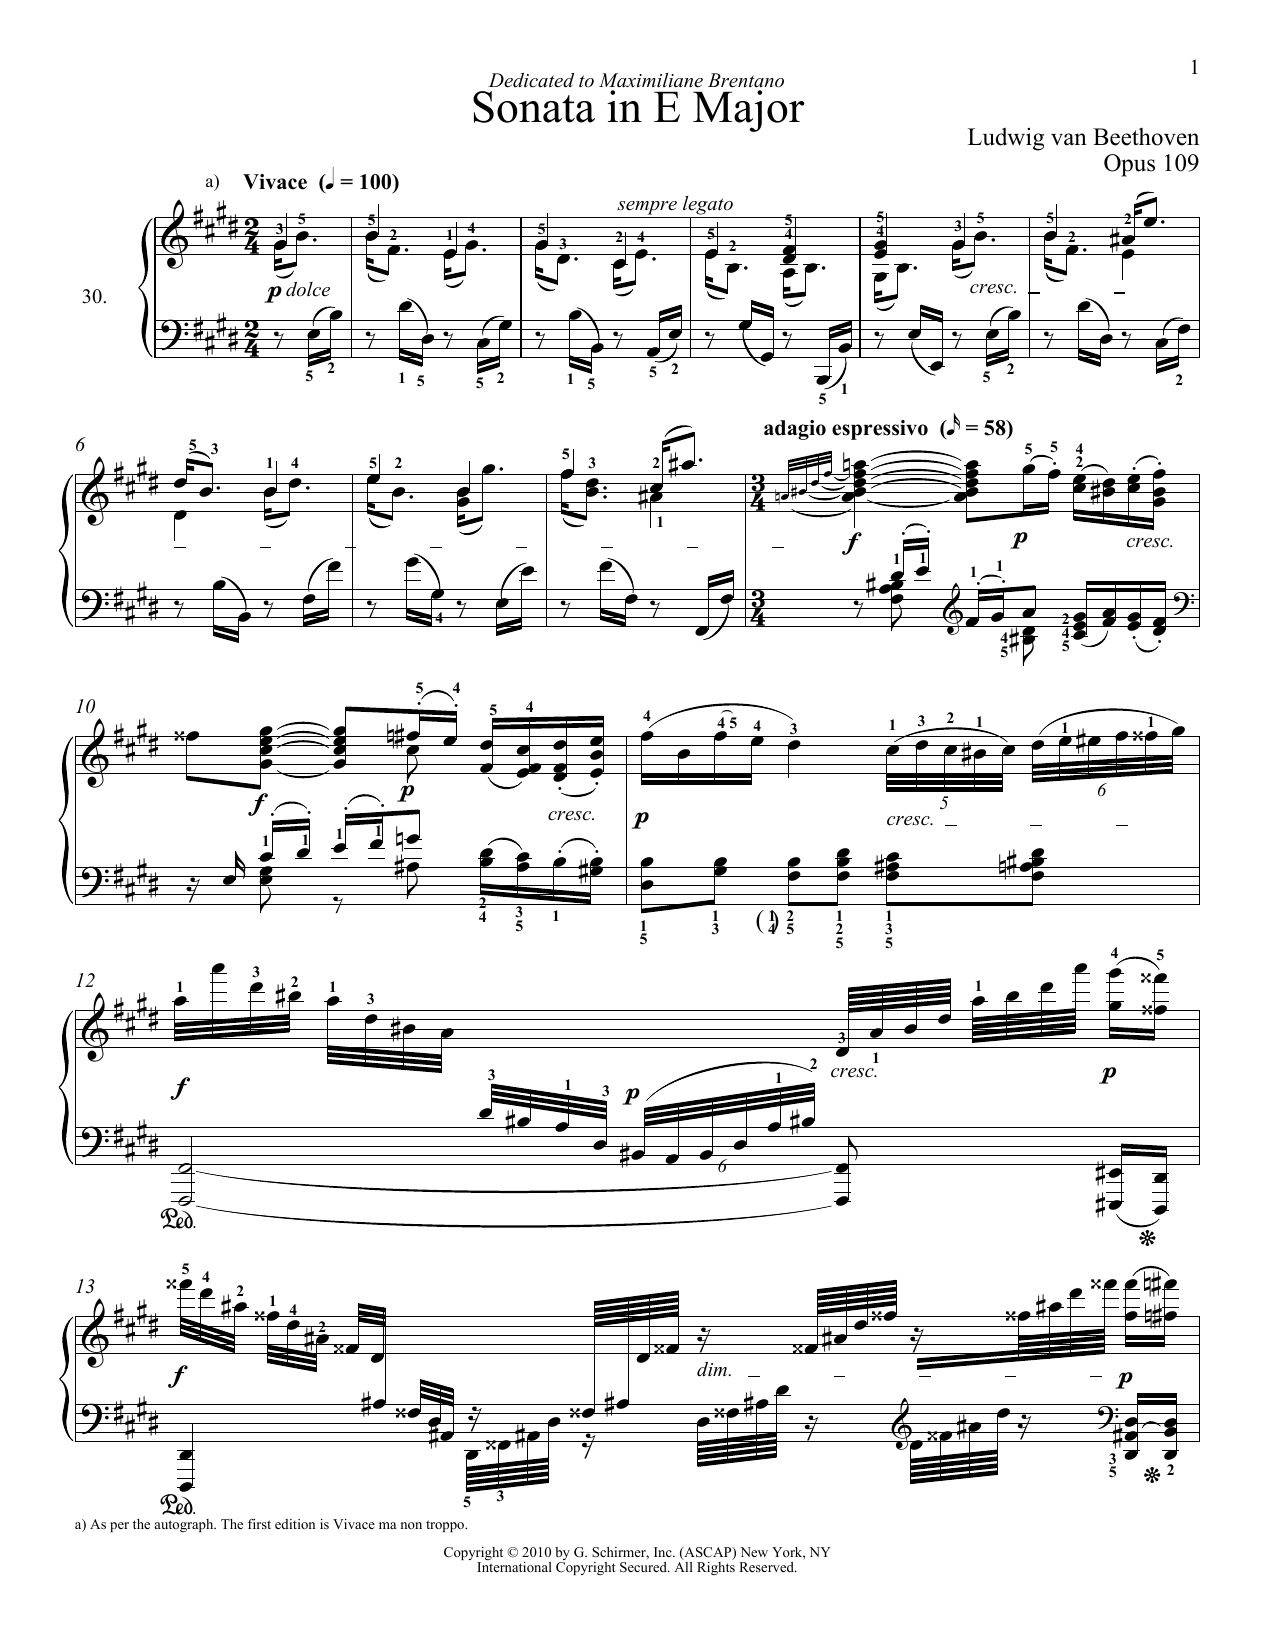 Ludwig van Beethoven Piano Sonata No. 30 In E Major, Op. 109 Sheet Music Notes & Chords for Piano - Download or Print PDF